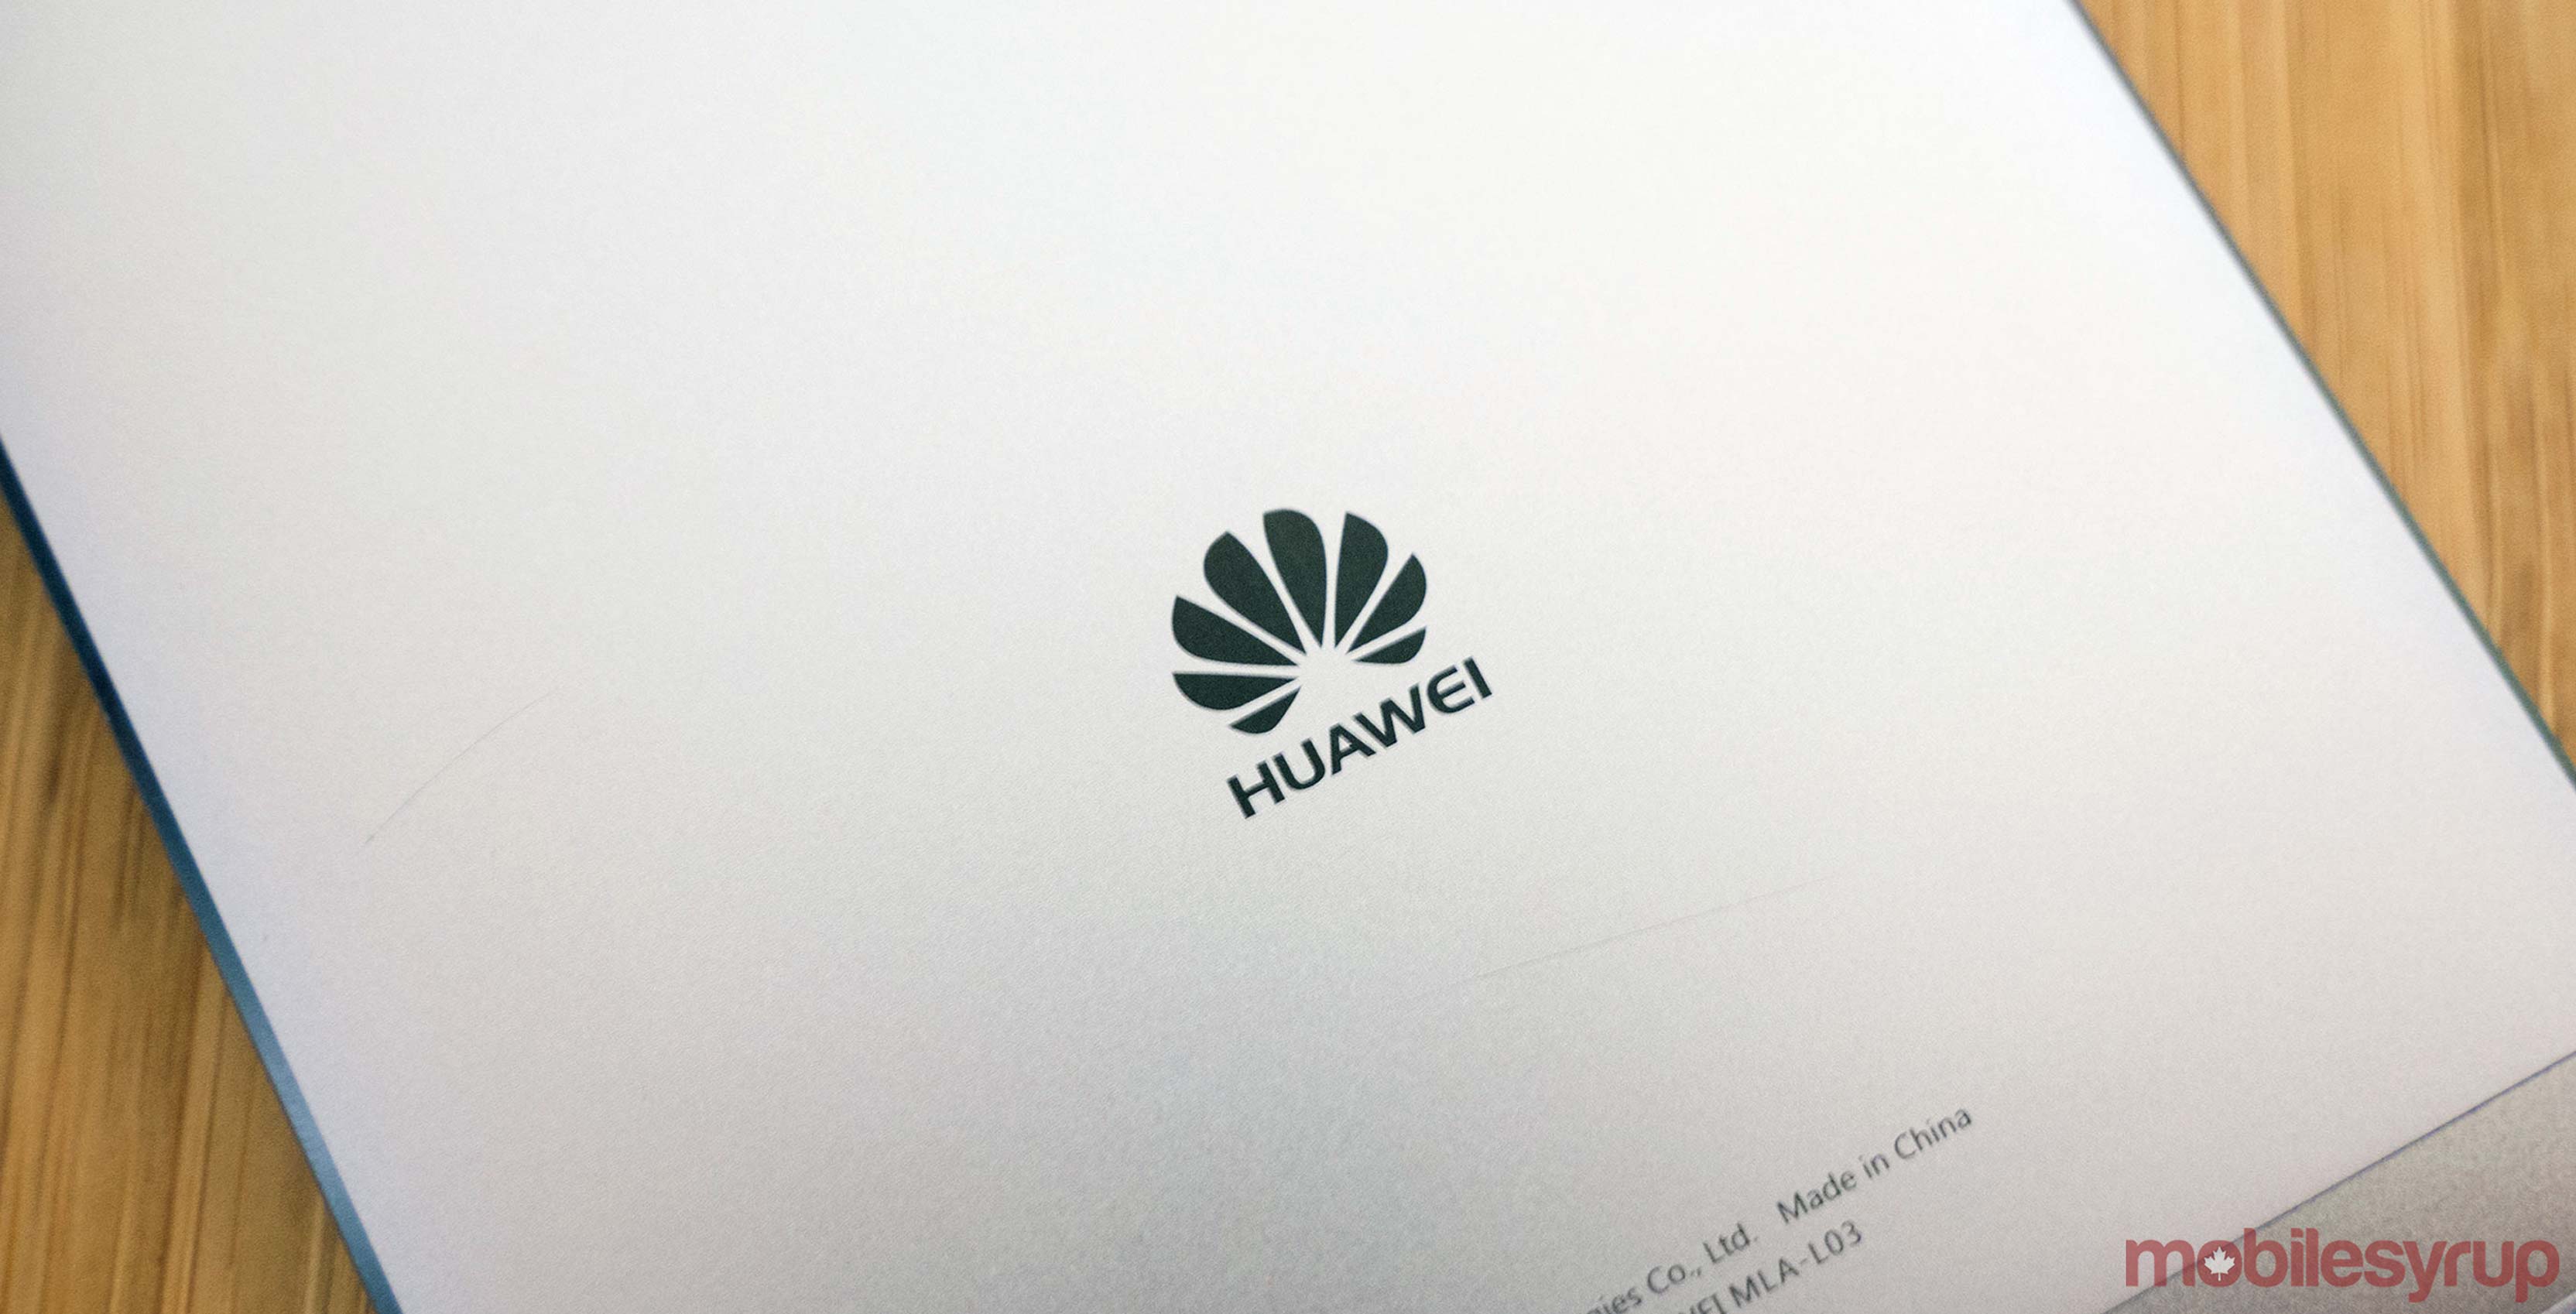 huawei logo on Nova Plus